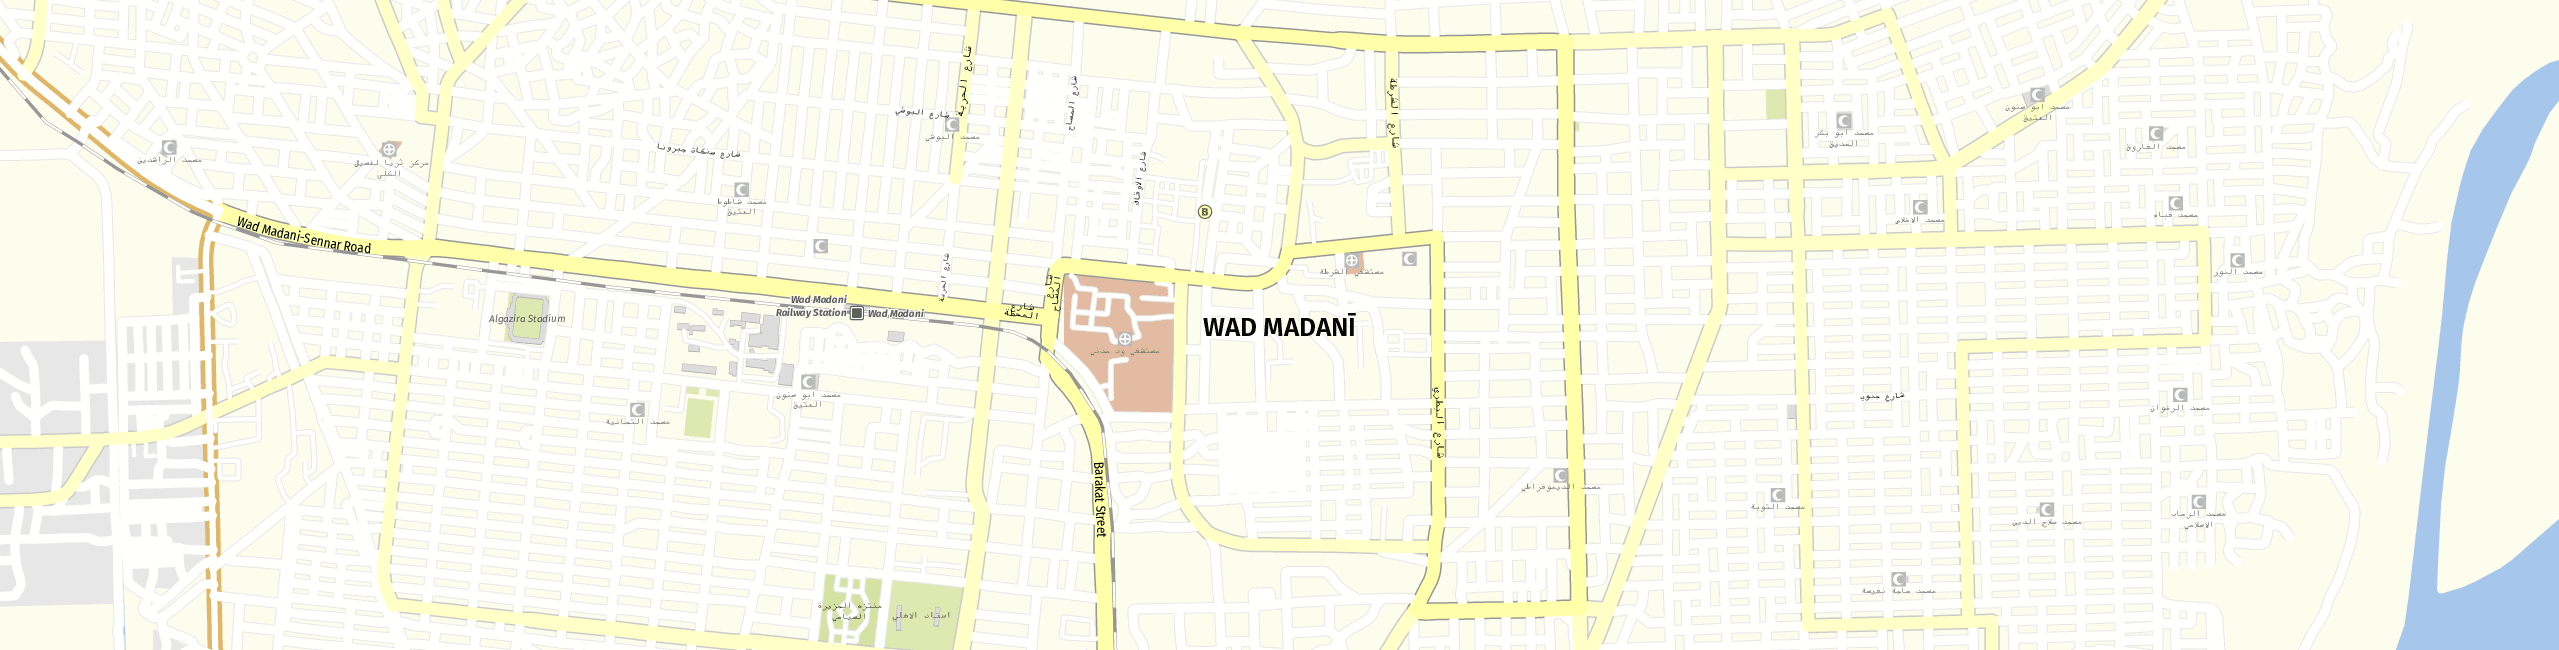 Stadtplan Wad Madanī zum Downloaden.